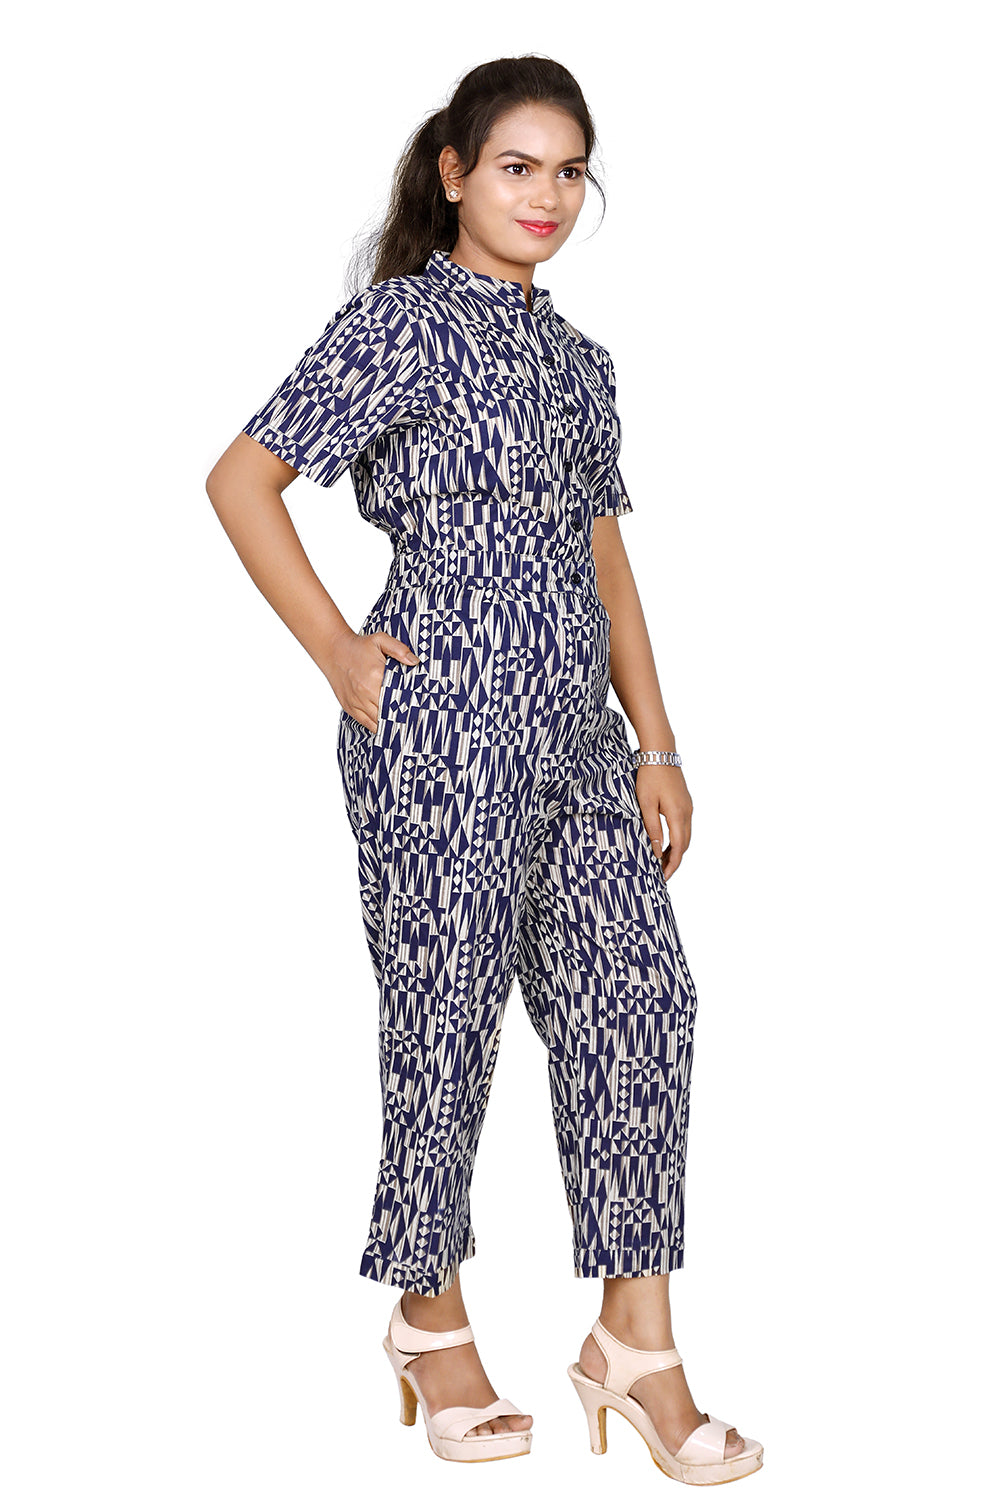 Madame Aqua Jump Suit | Buy COLOR Aqua Jumpsuit Online for | Glamly